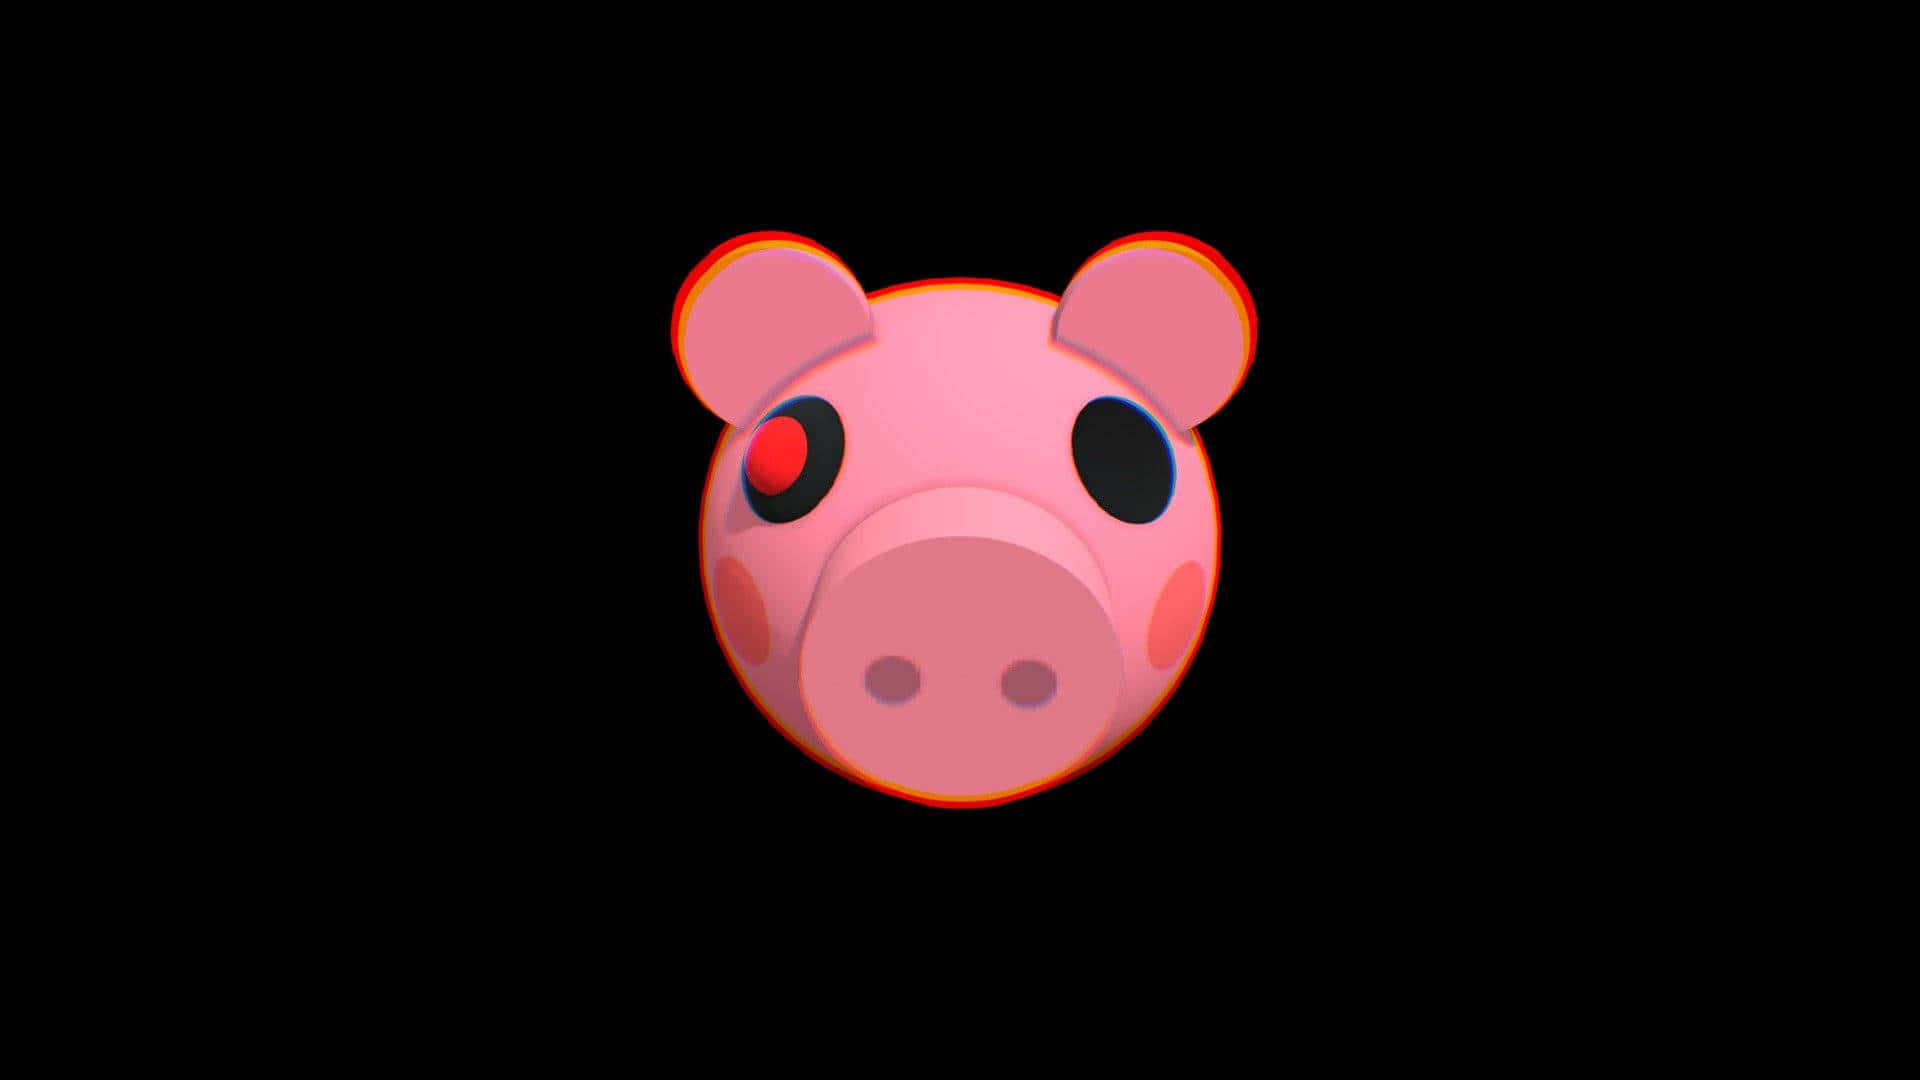 An Endearing Portrait of a Piglet